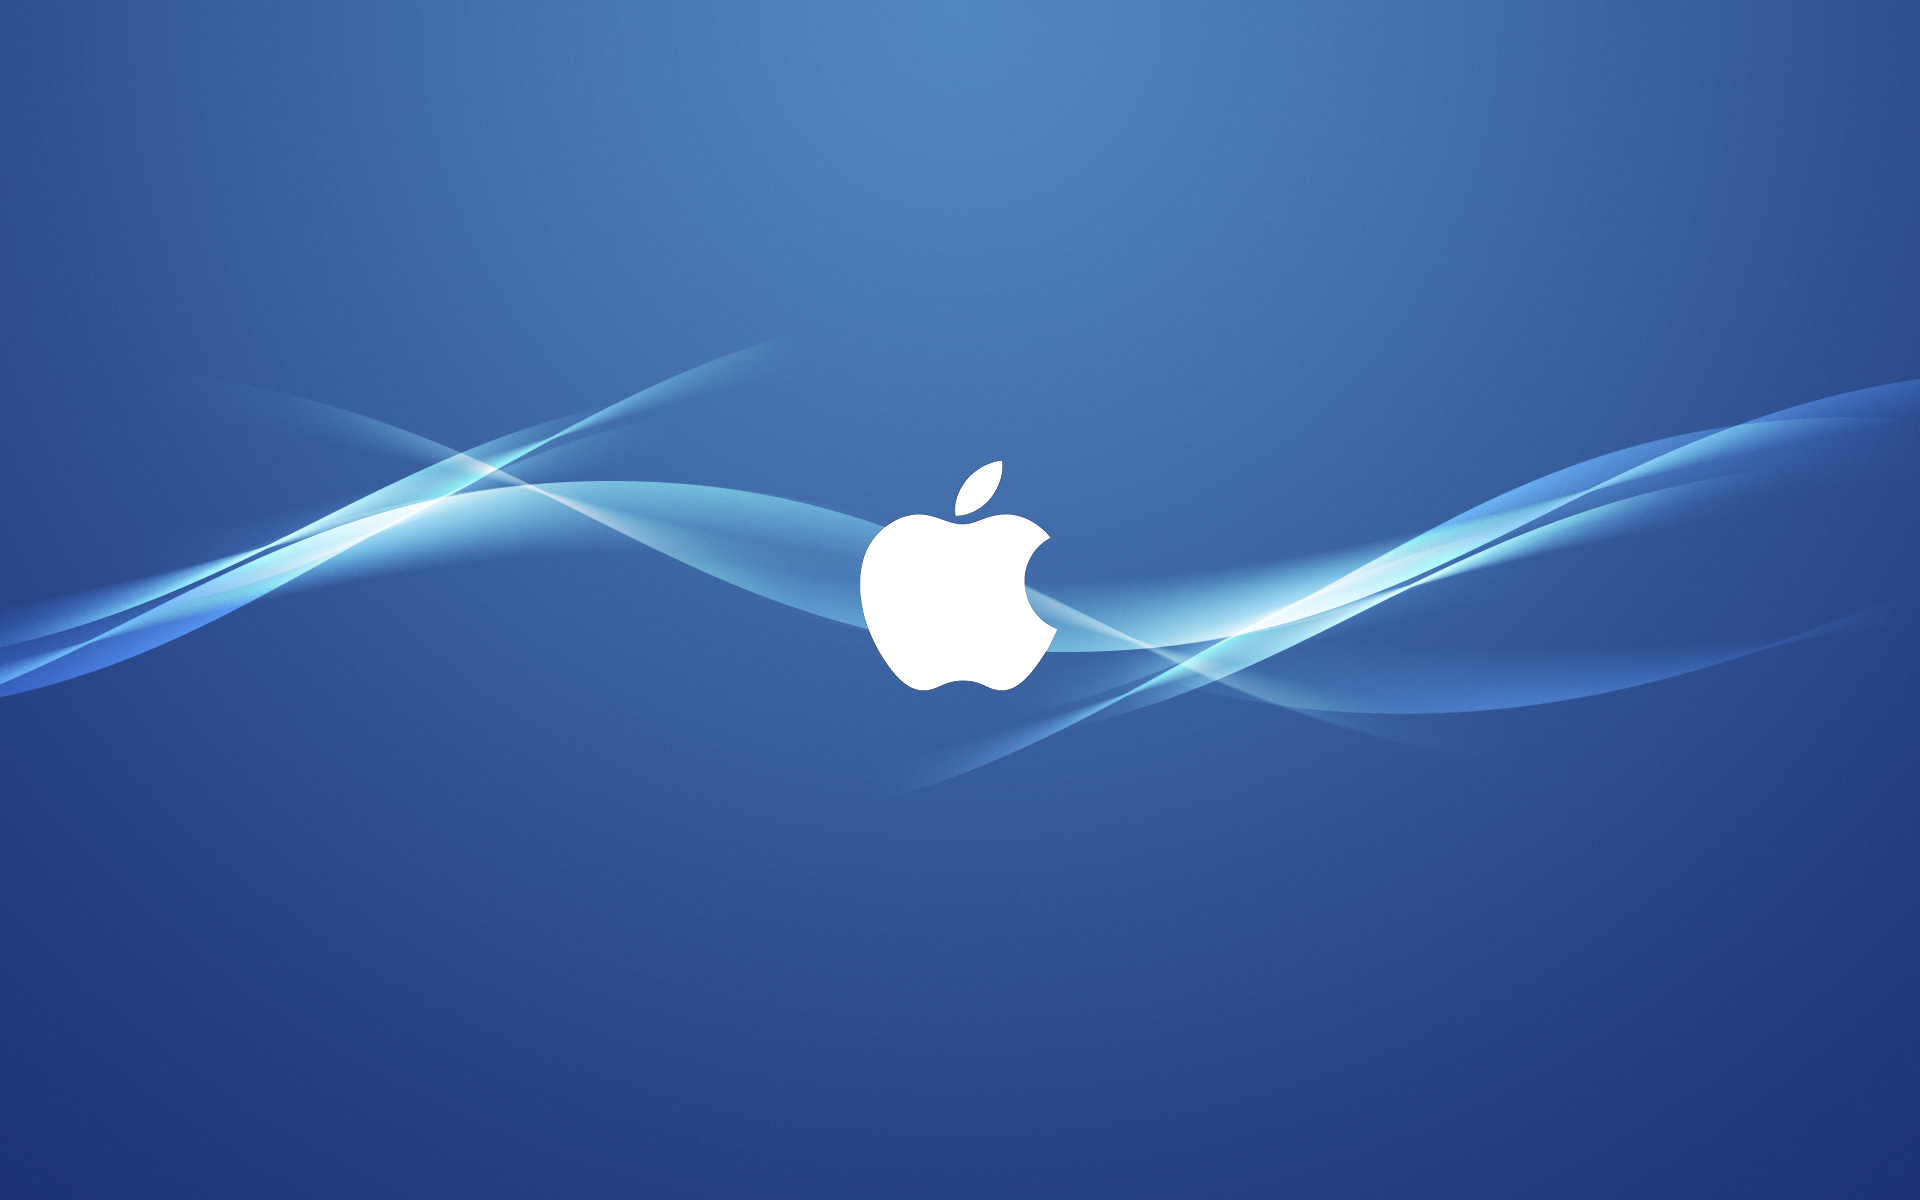 apple free desktop picture. Macbook air wallpaper, Apple logo wallpaper, Macbook wallpaper